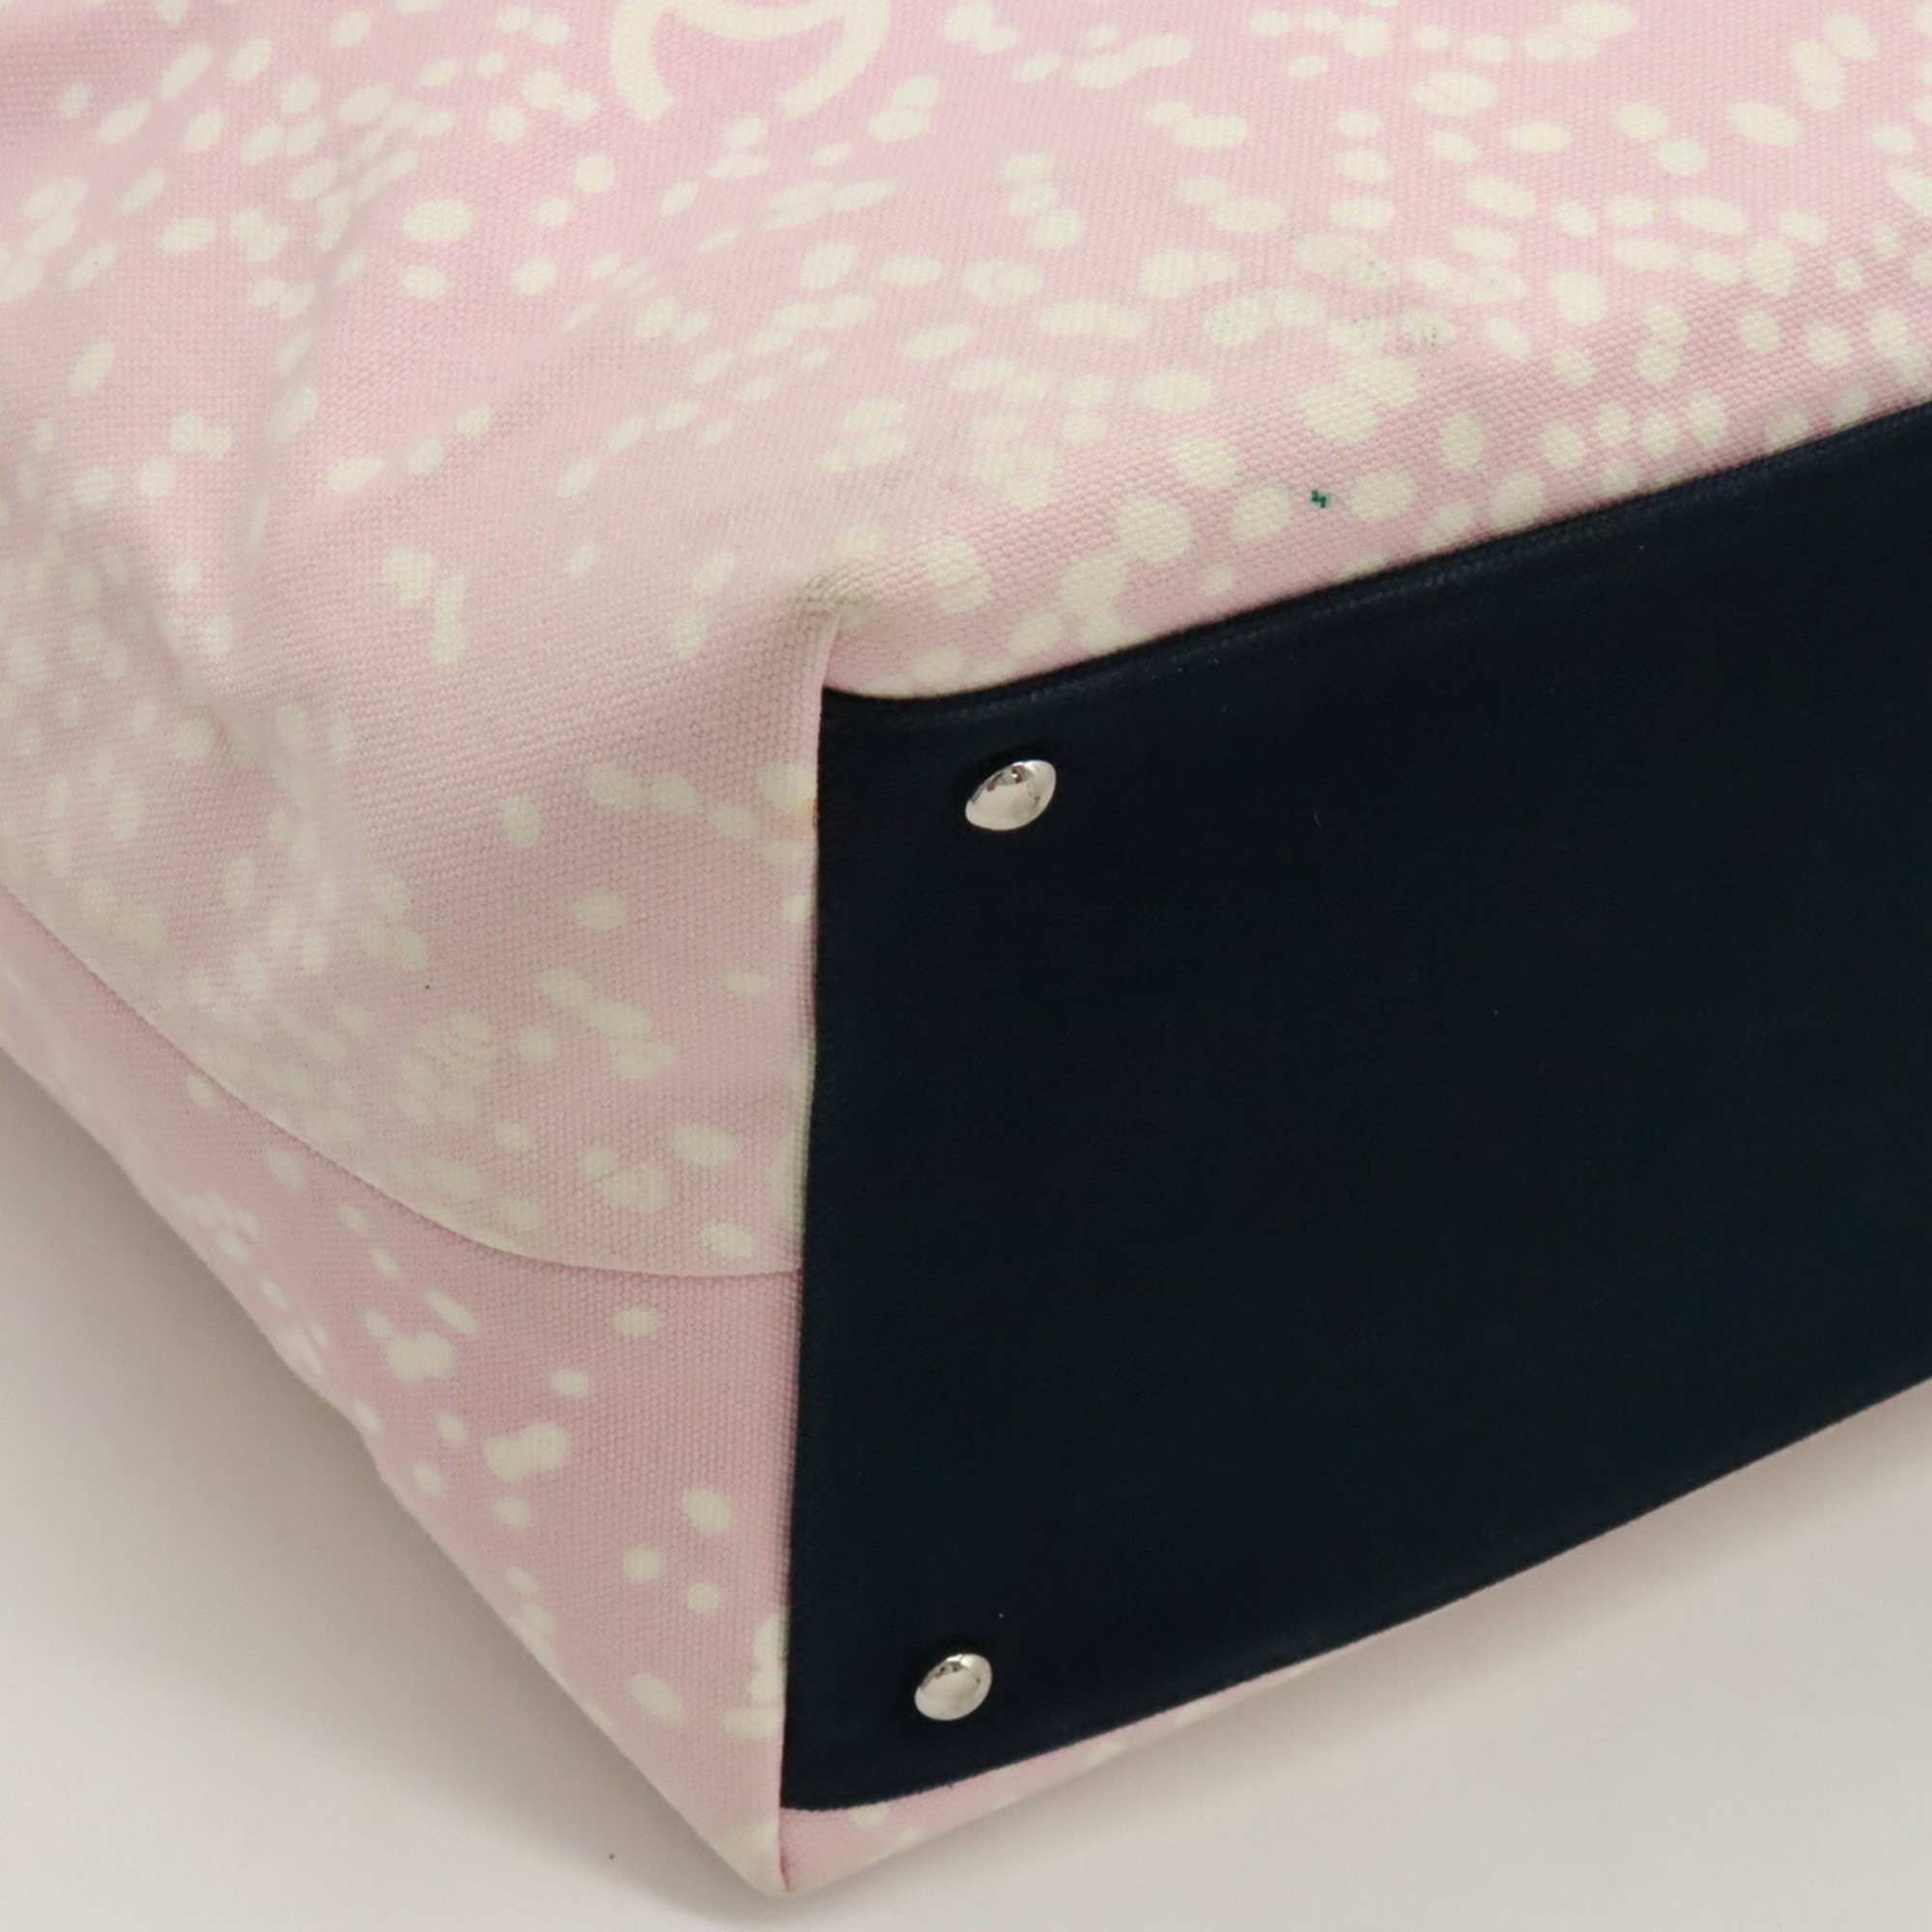 CHANEL Chanel High Summer Coco Mark Tote Bag Large Shoulder Canvas Pile Pink Black